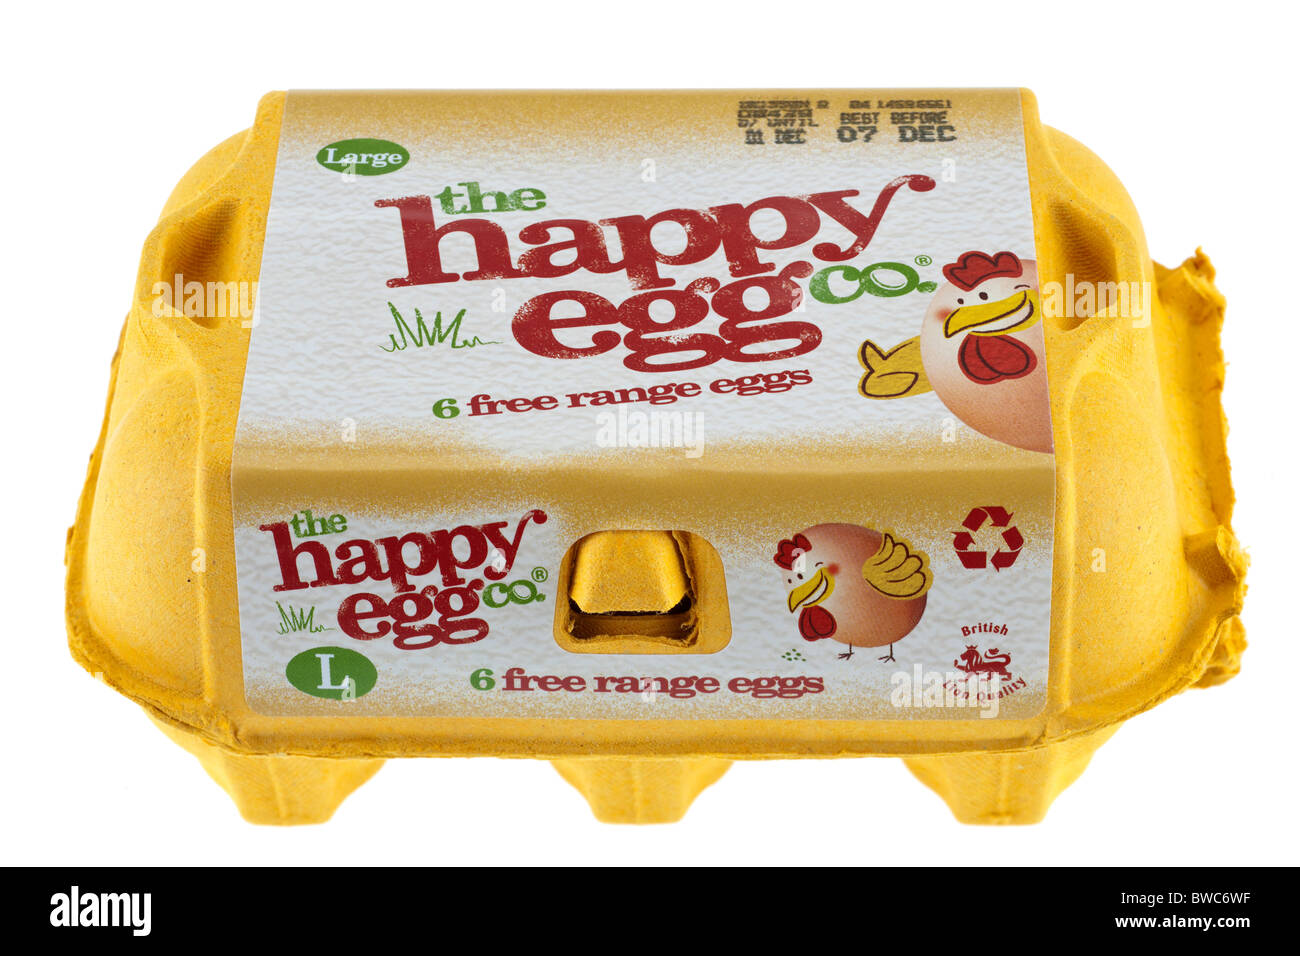 Sei in box free range le uova dal felice uovo co Foto Stock